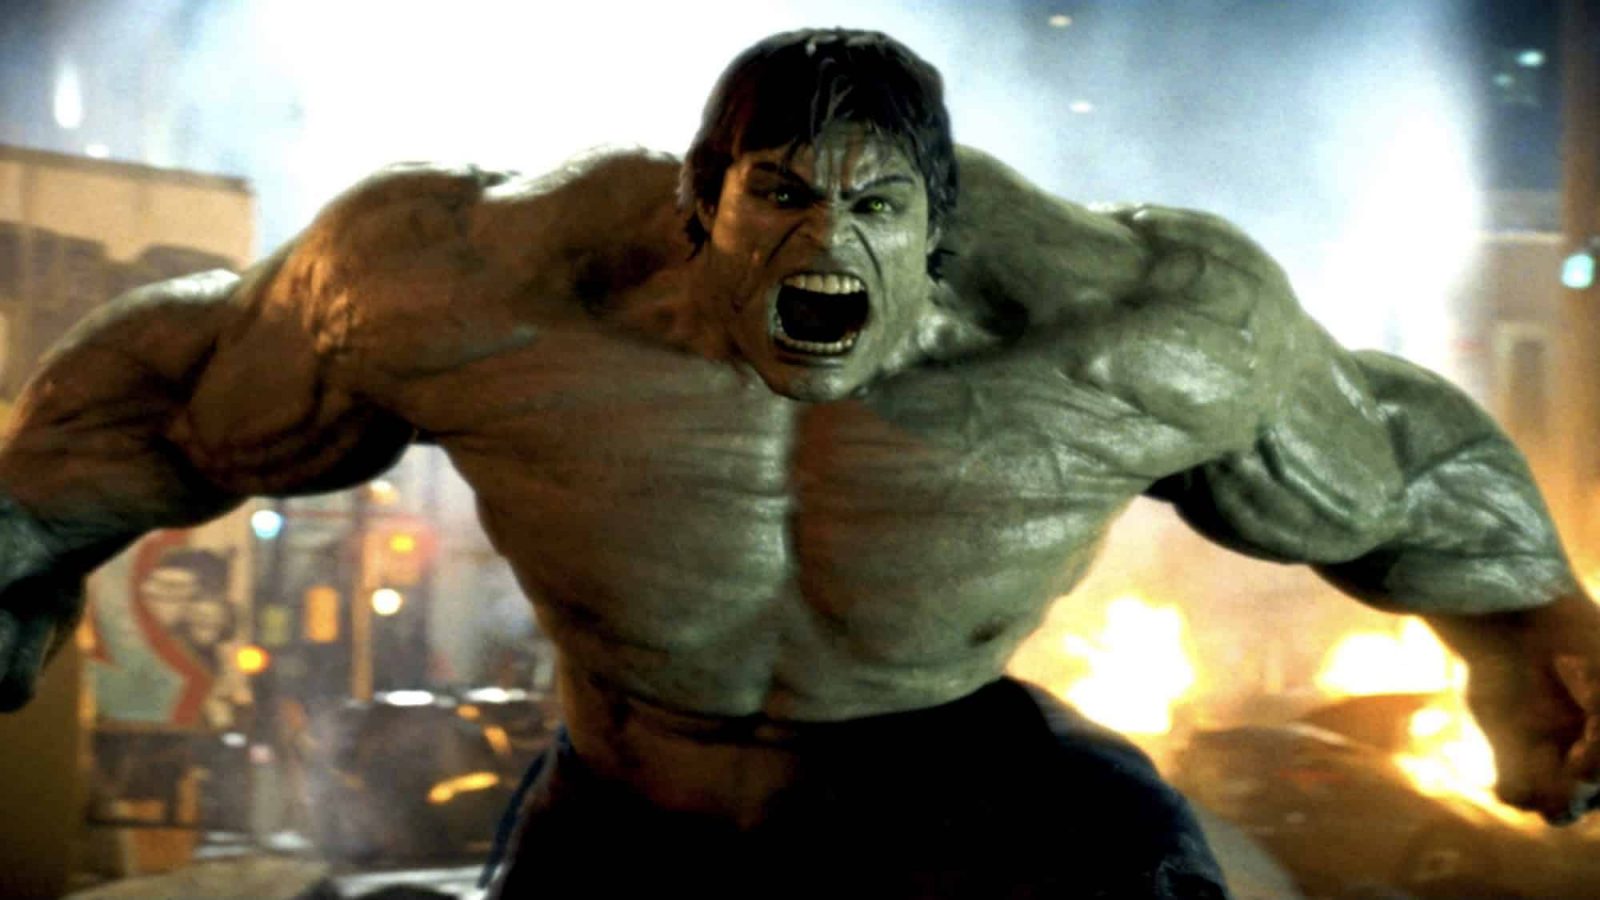 The-Ingredible-Hulk-gets-agitat-in-faza-1-of-the-marvel-cinemato-universe